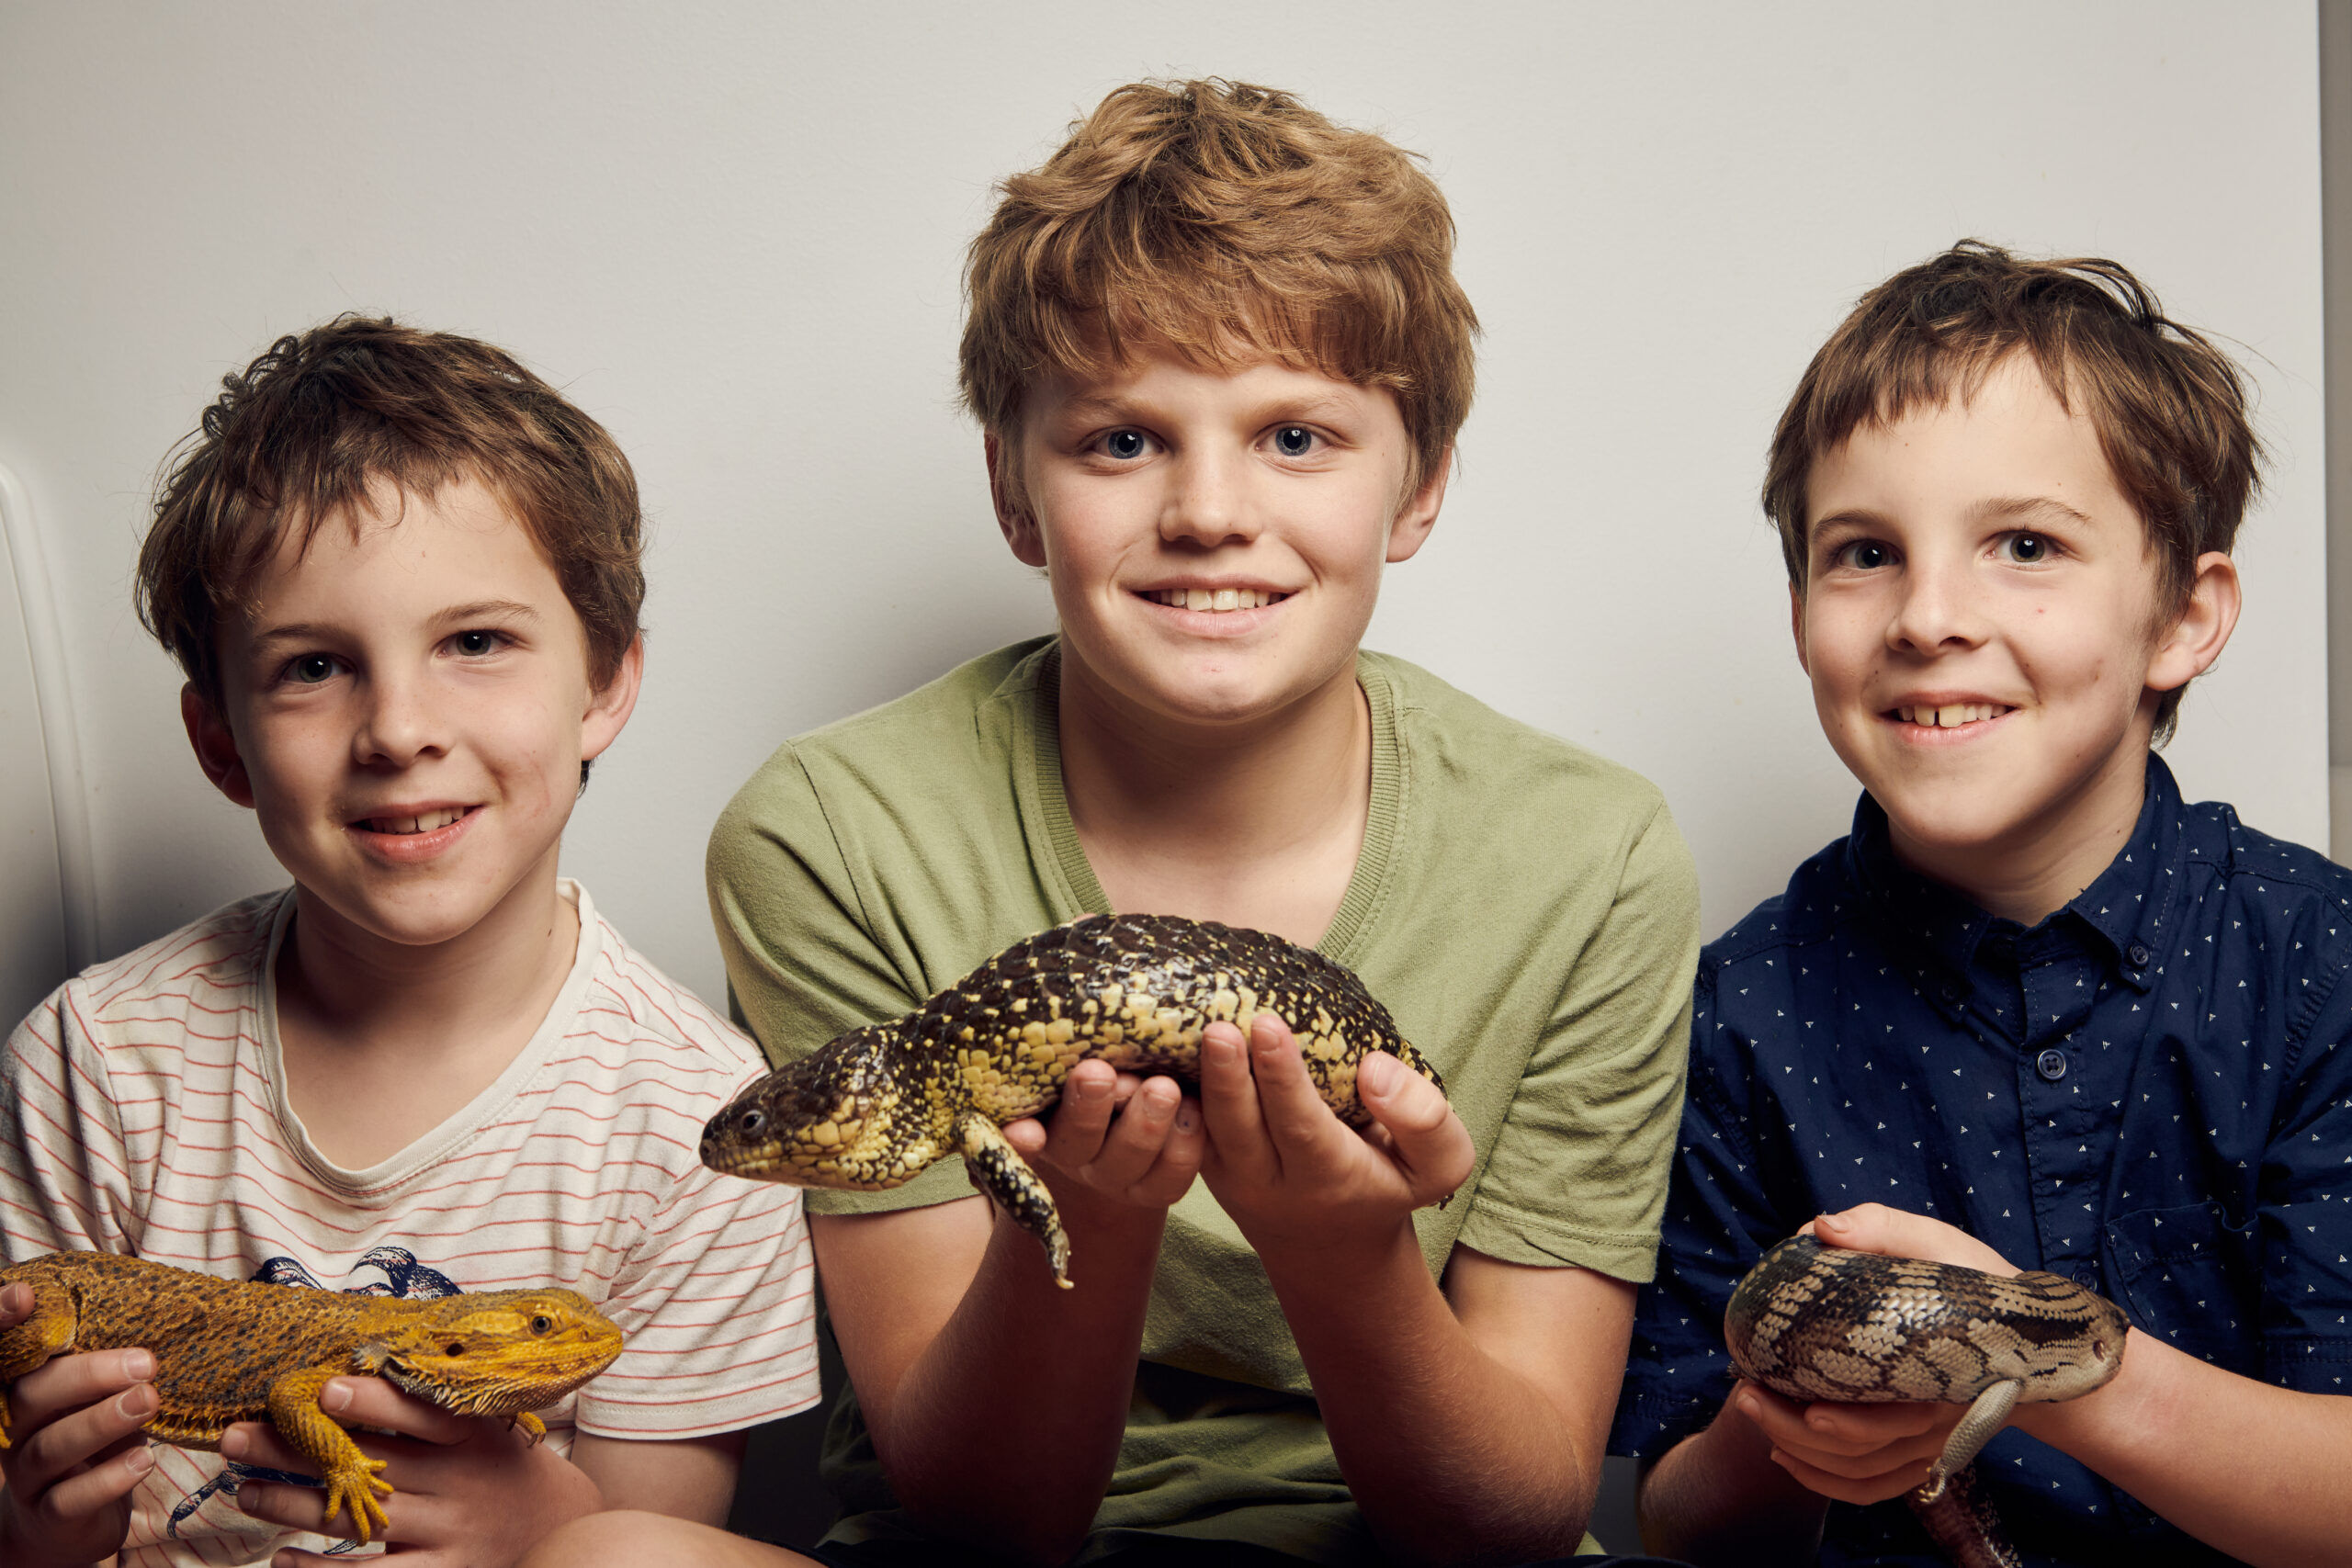 Three boys with pet lizards